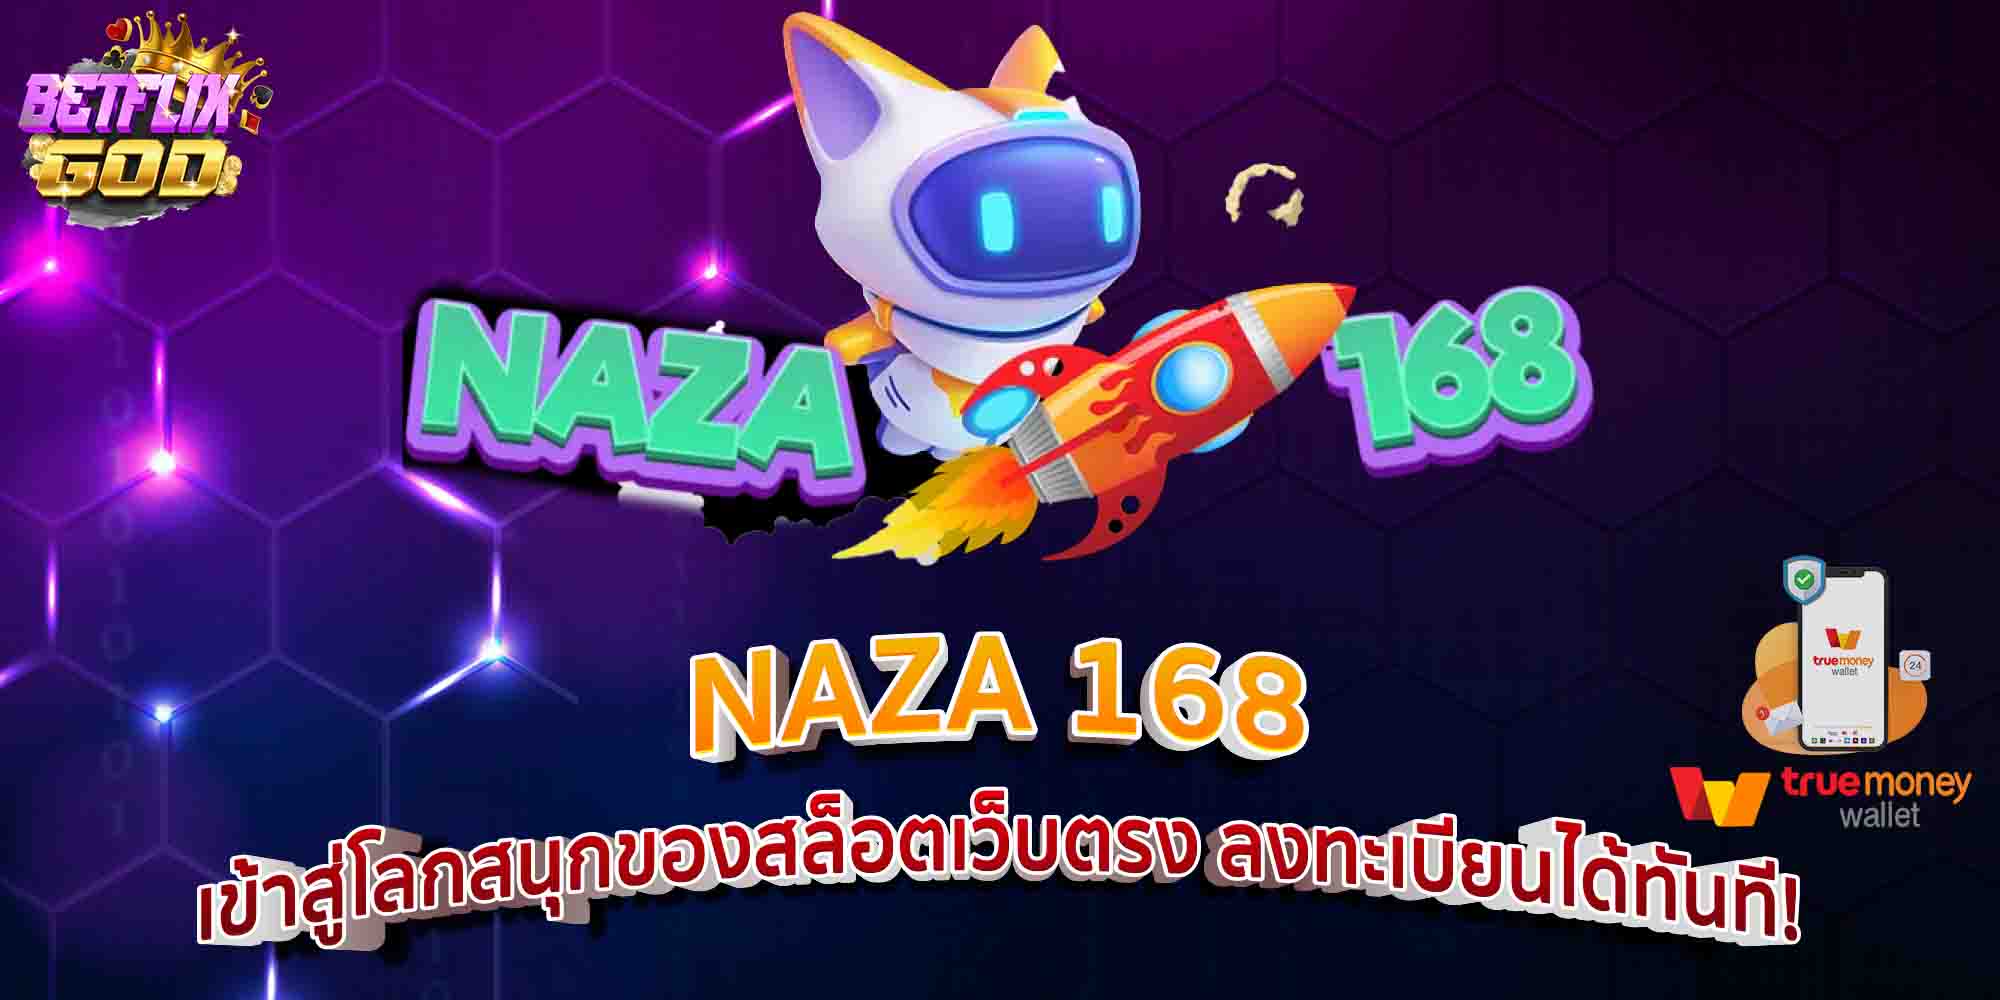 NAZA 168 เข้าสู่โลกสนุกของสล็อตเว็บตรง ลงทะเบียนได้ทันที!